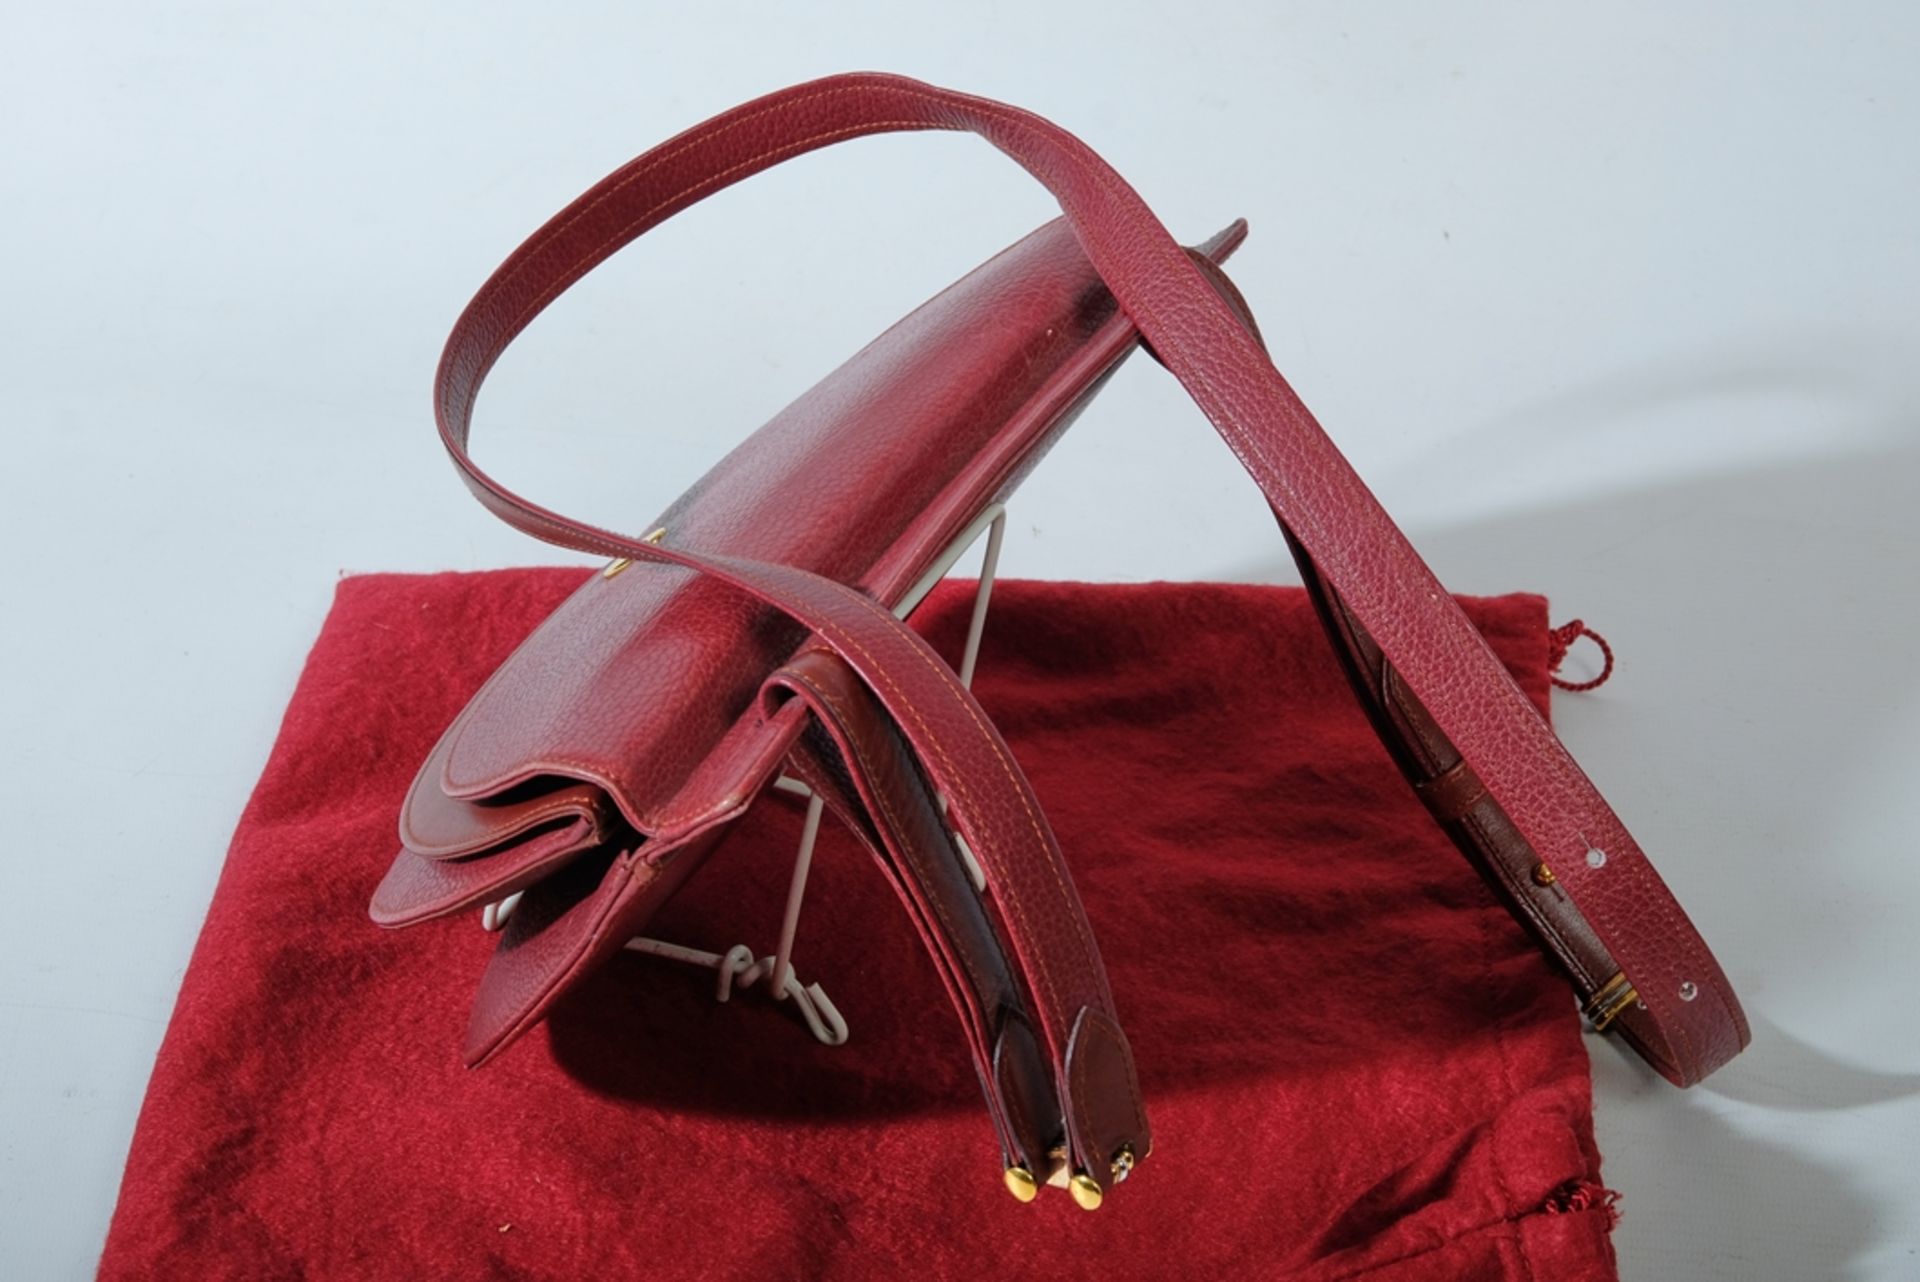 HANDTASCHE CARTIER bordeauxrotes Leder, klassische halbrunde Form, verstellbarer langer Schultergur - Bild 2 aus 3